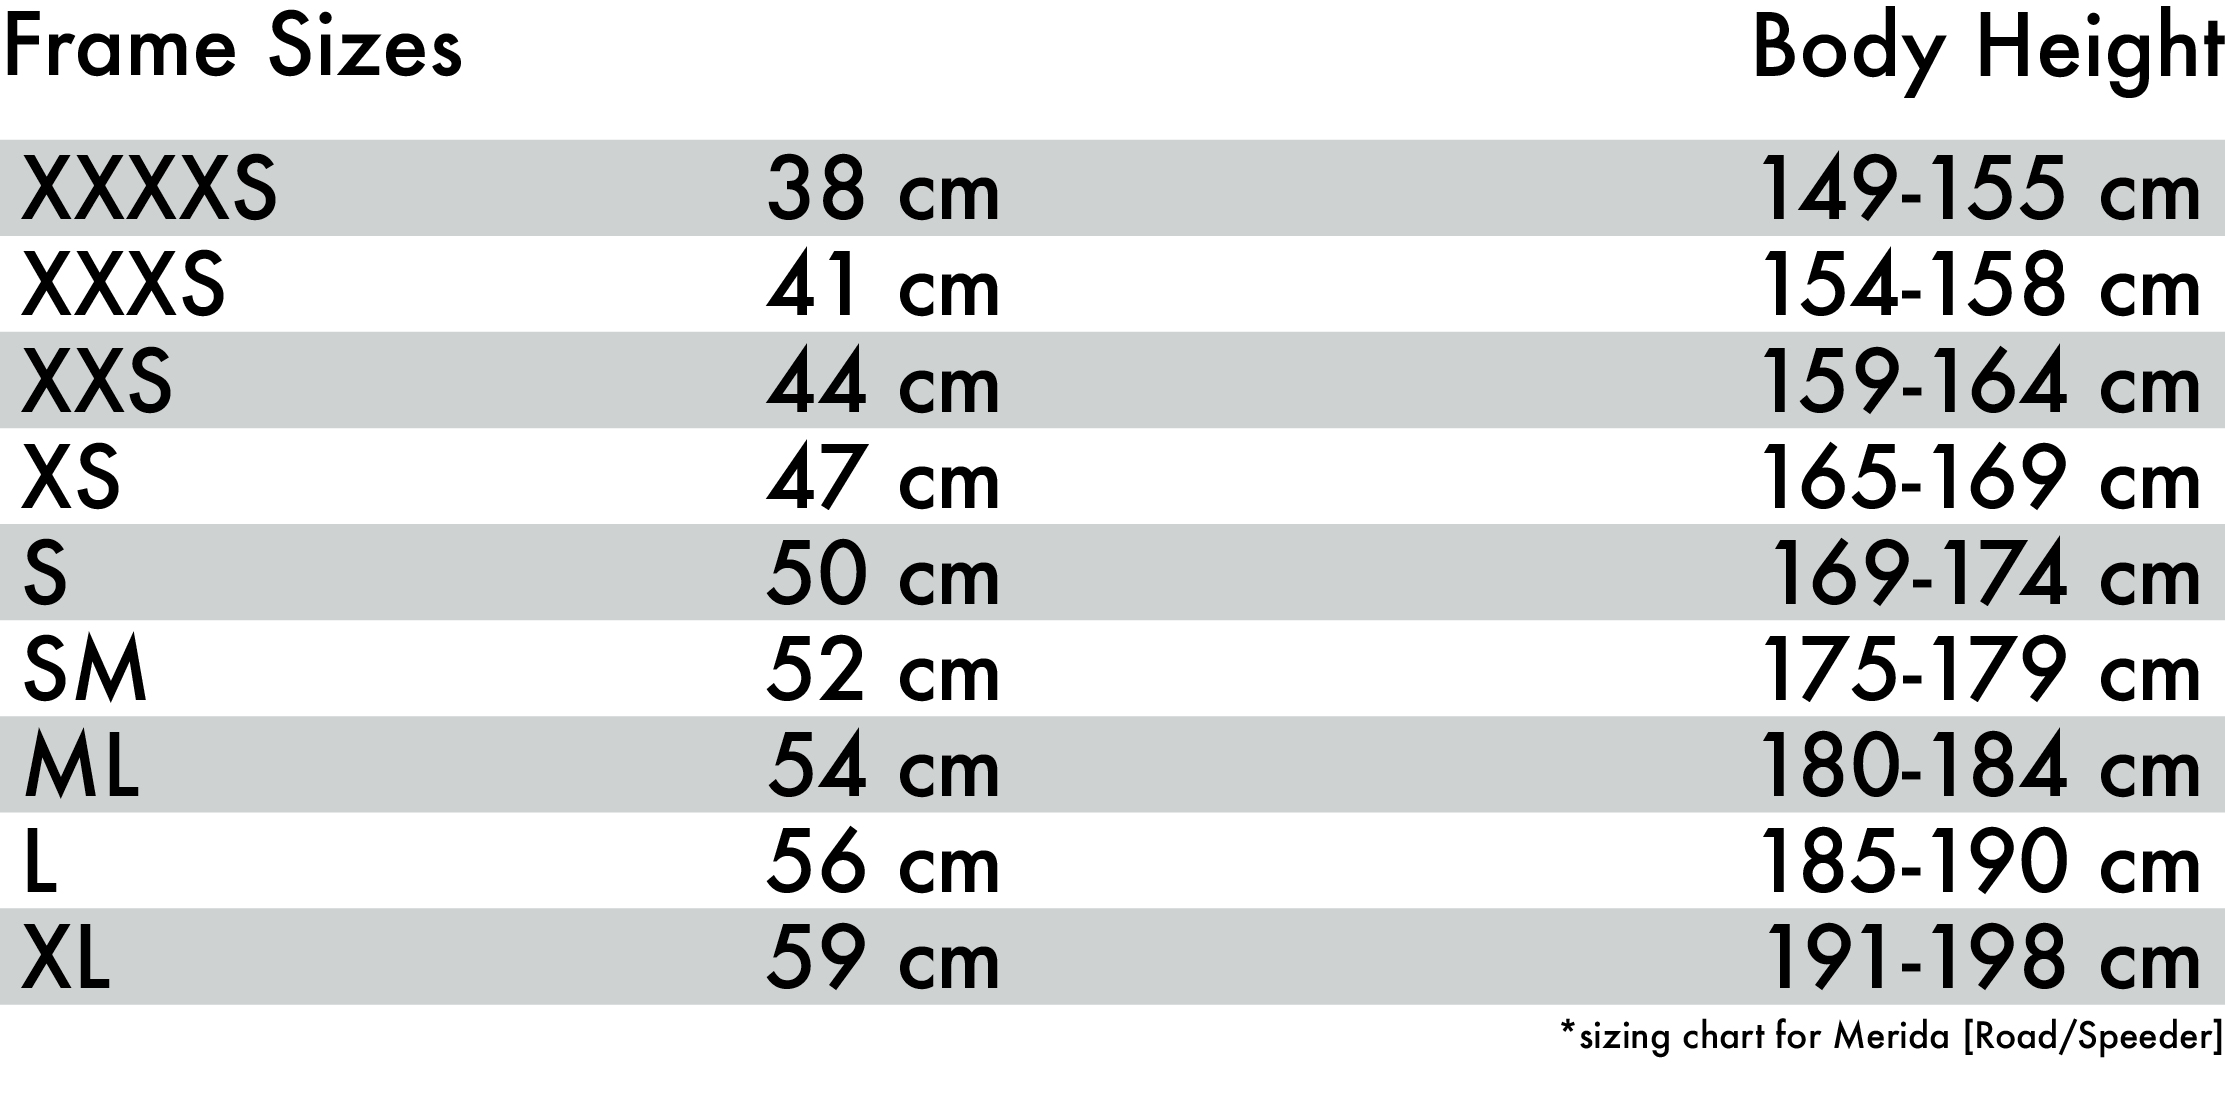 56cm Frame Size Chart